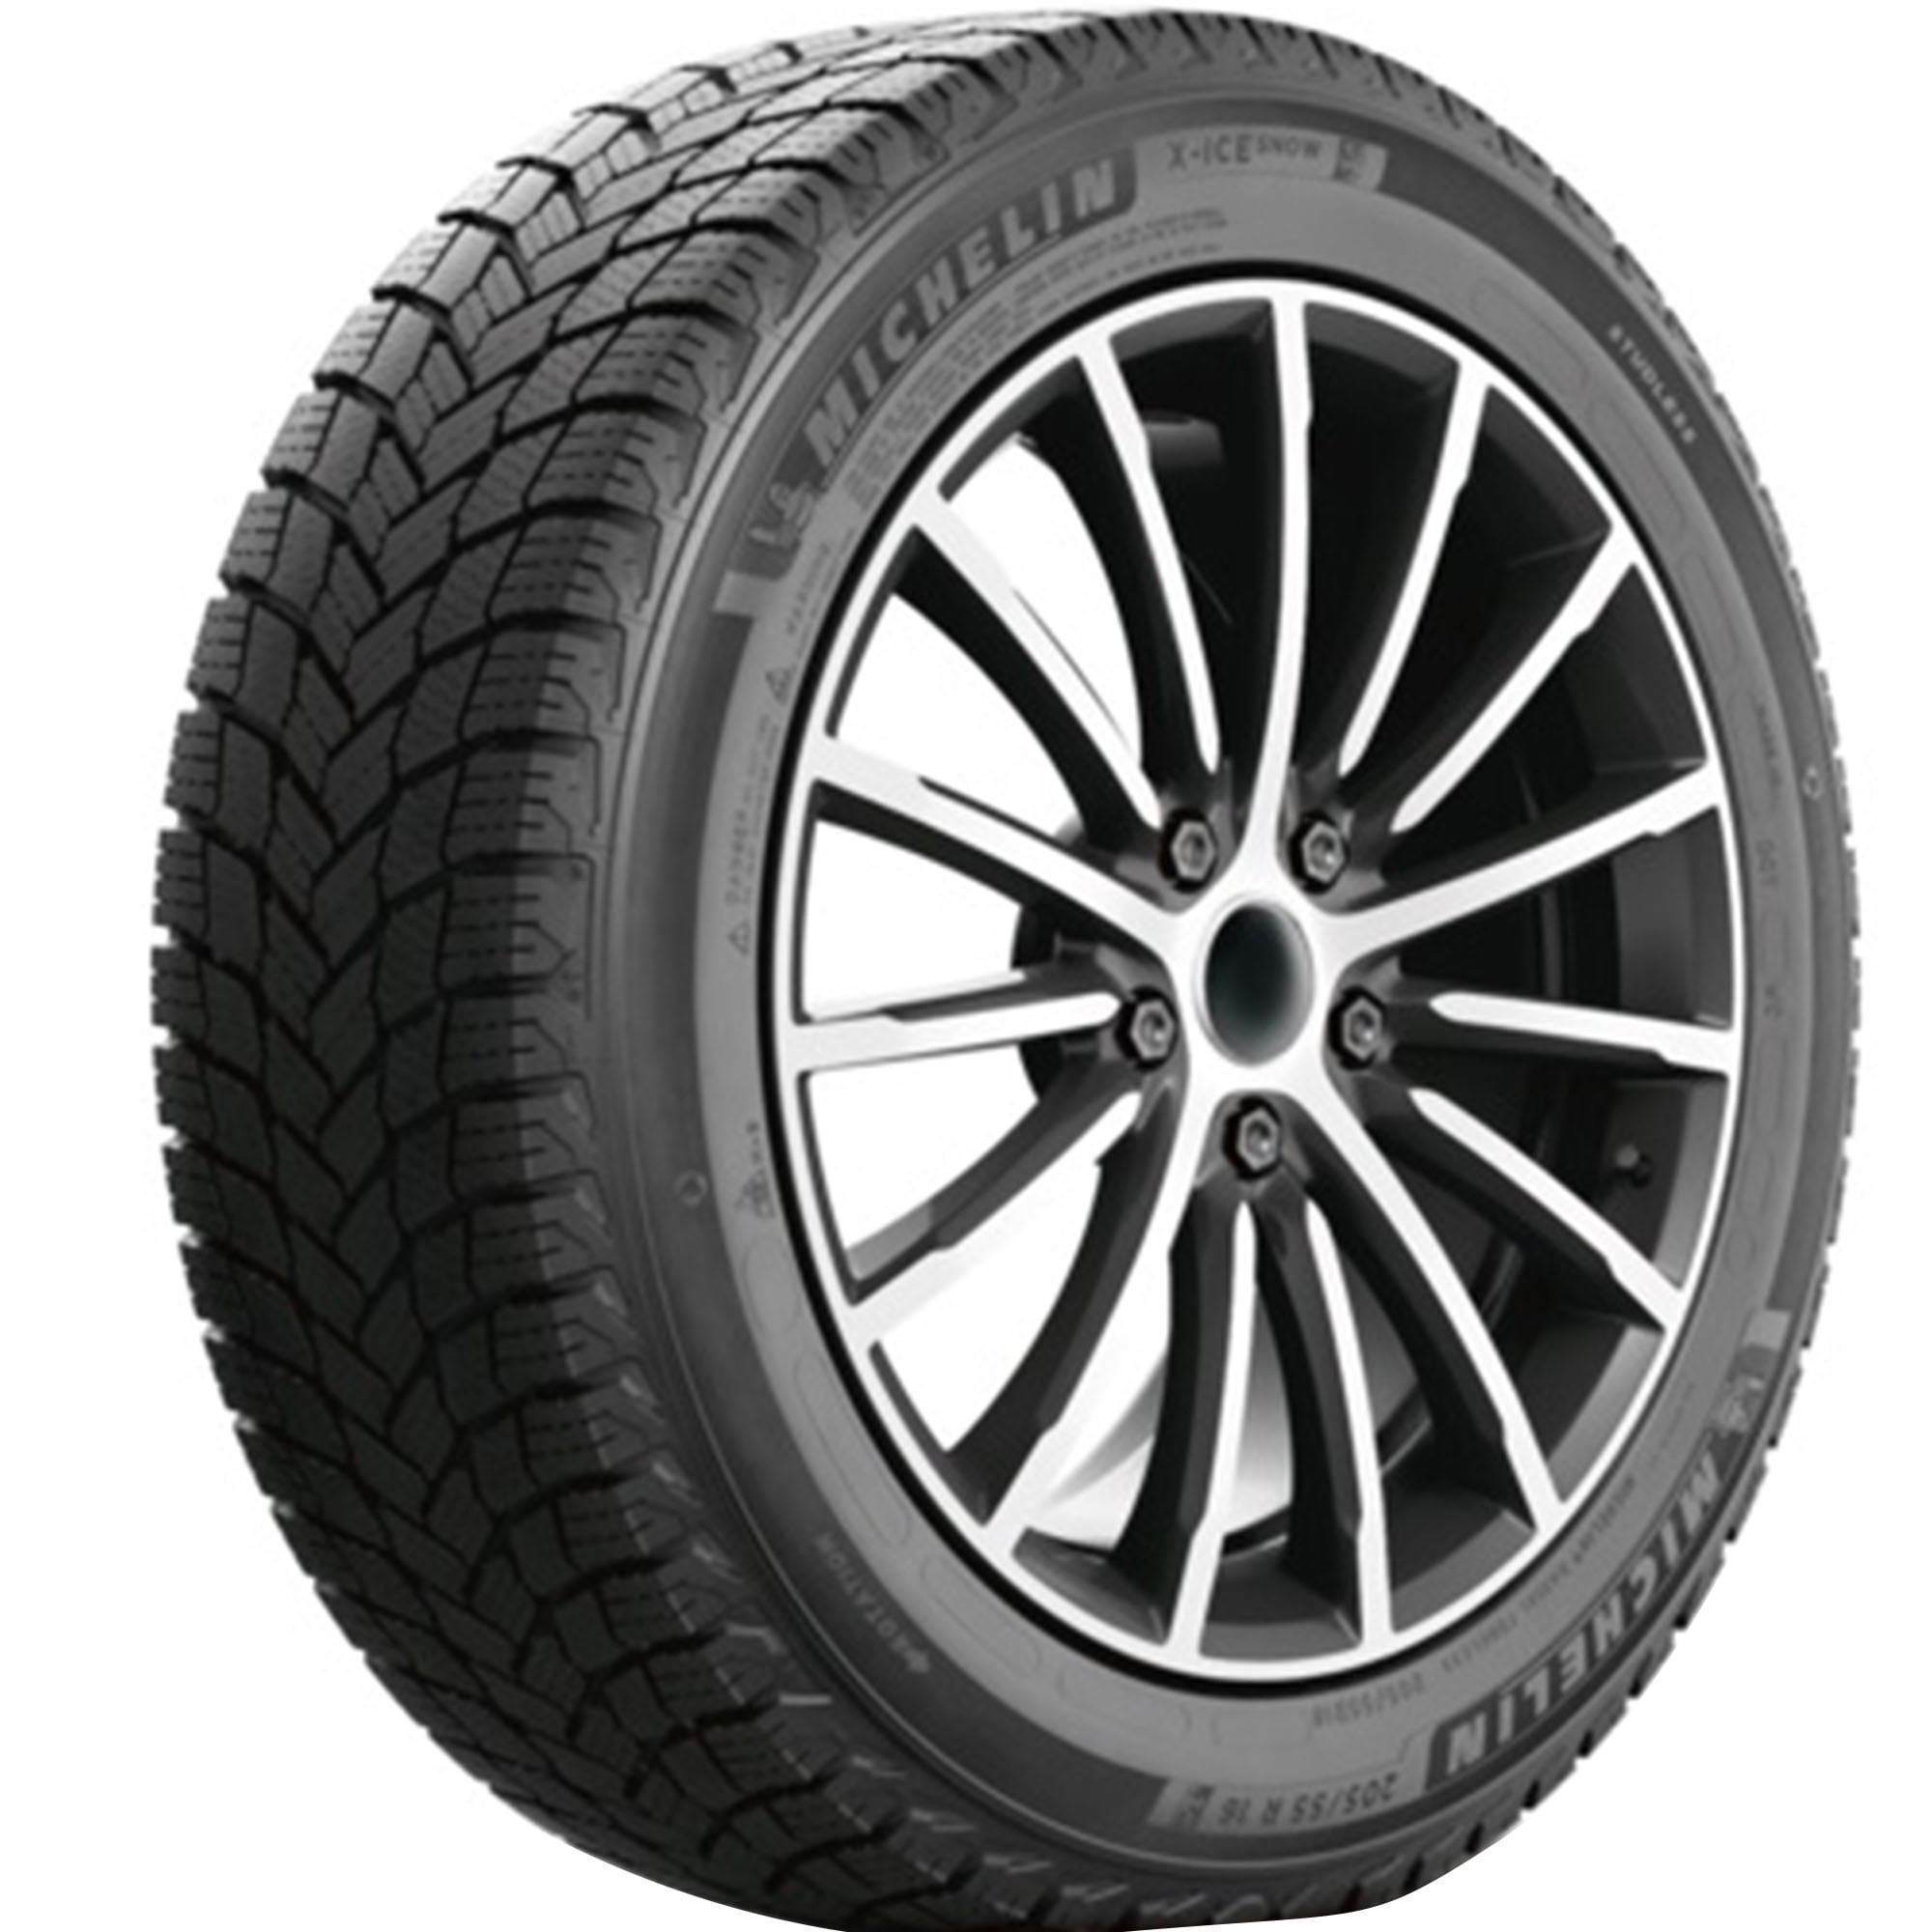 Michelin X-Ice Snow Winter 205/65R16 99T XL Passenger Tire